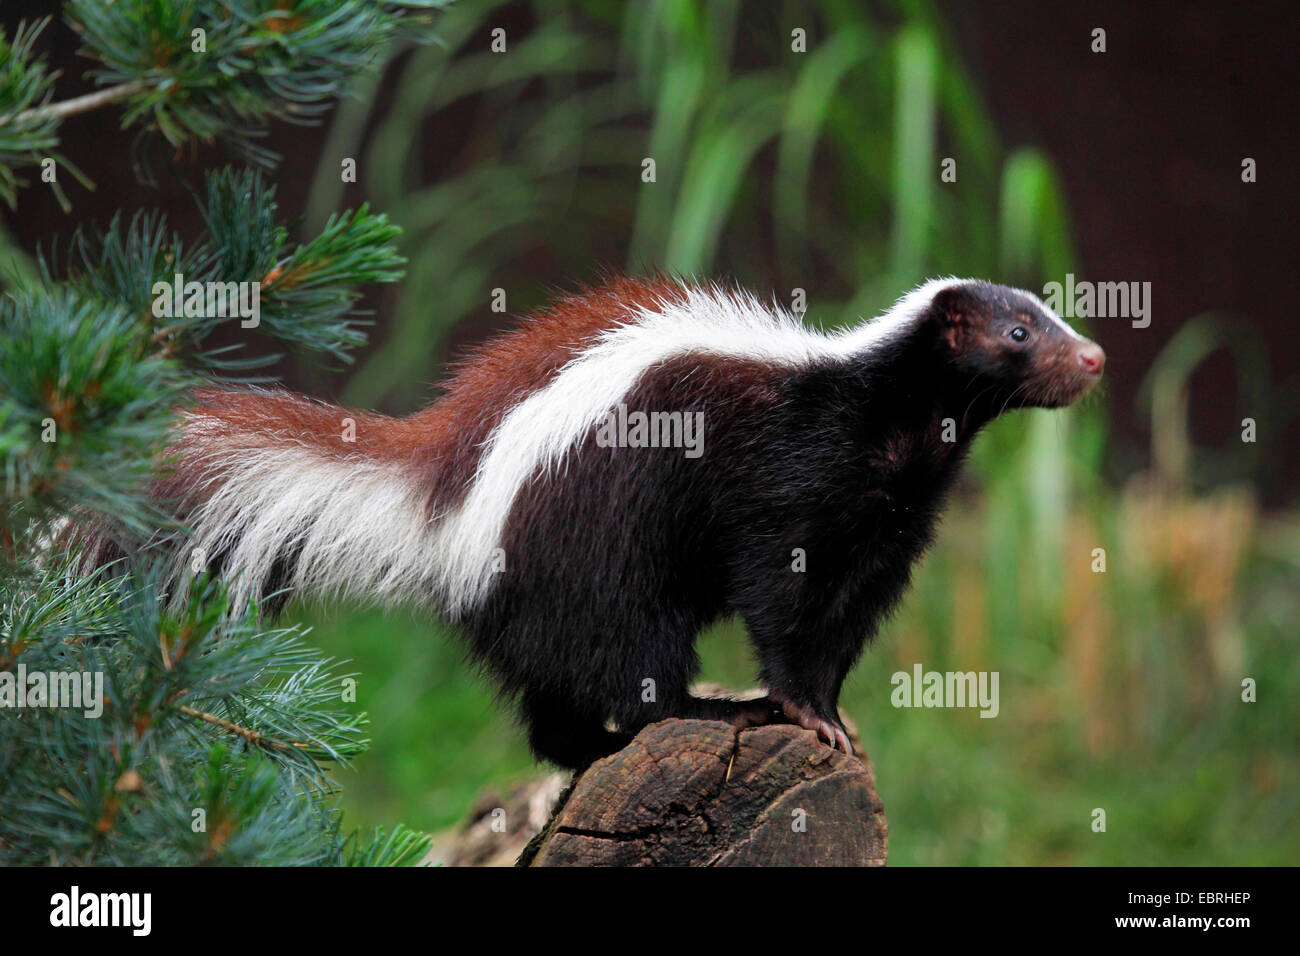 striped skunk (Mephitis mephitis), on a log, USA Stock Photo